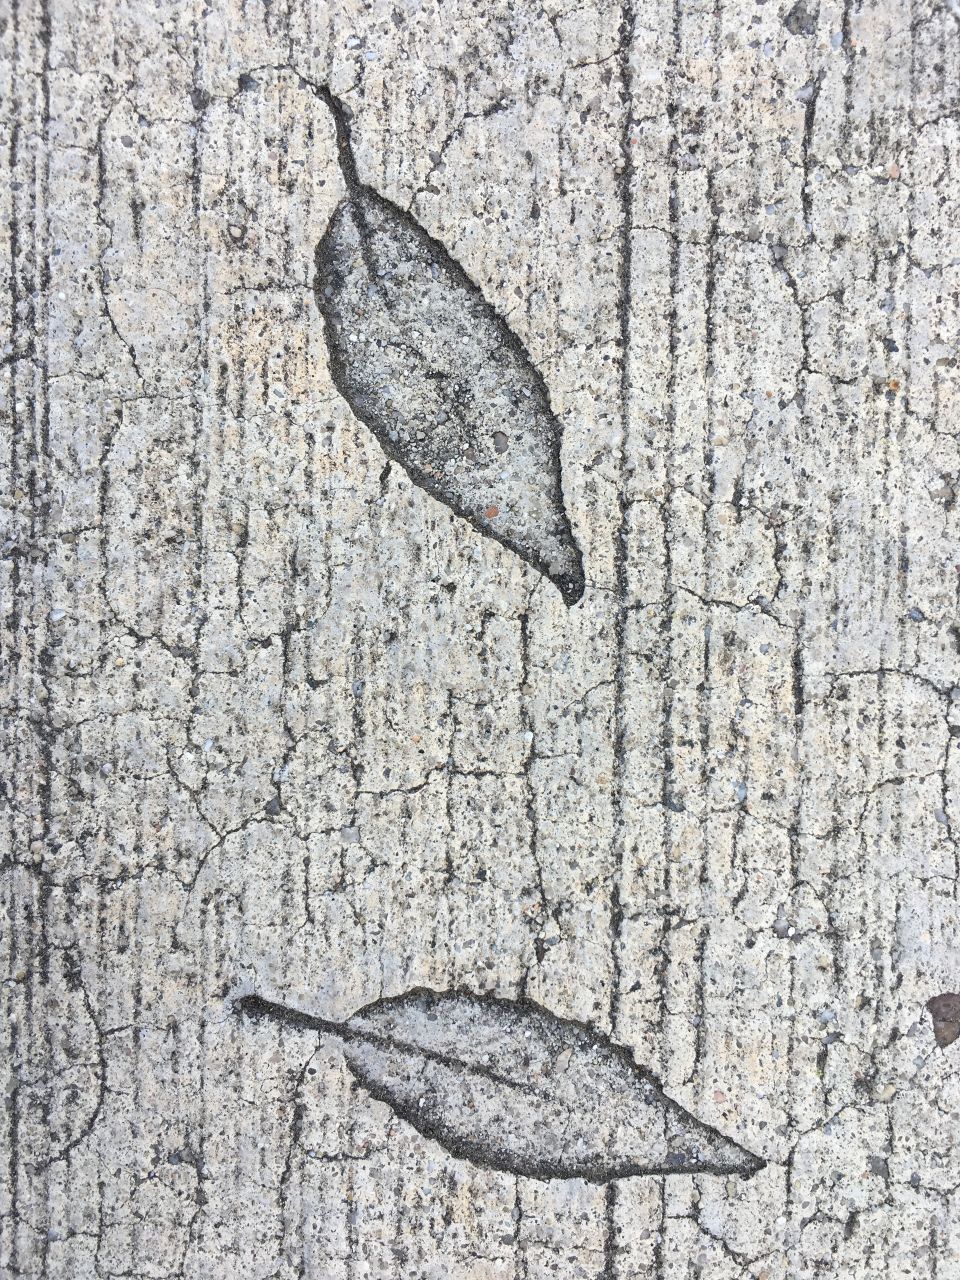 Leaf impressions in concrete 